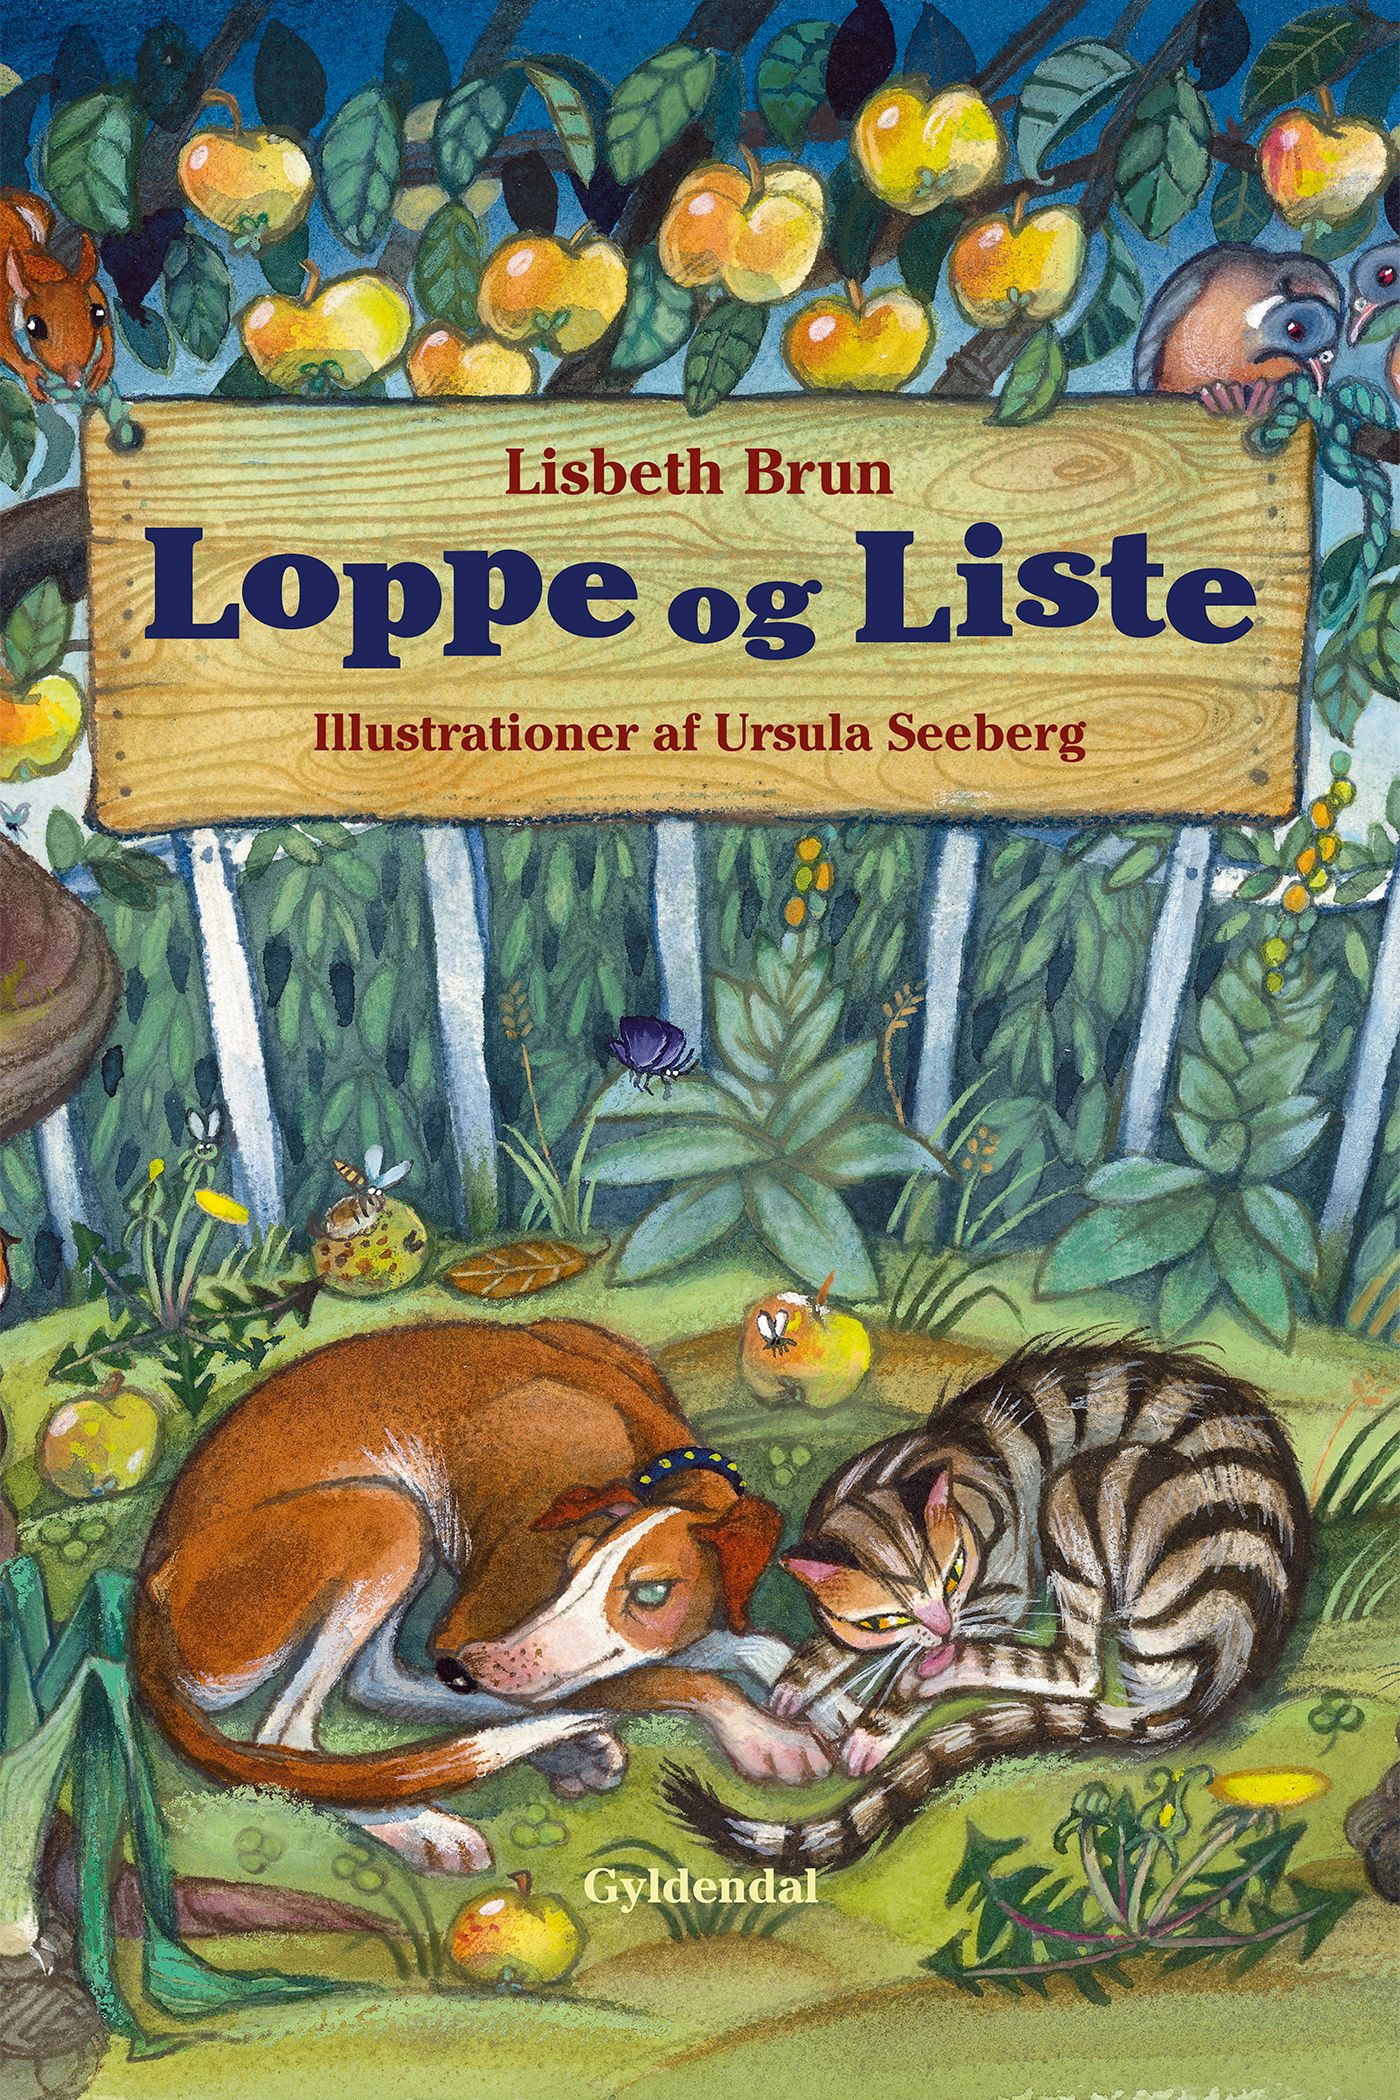 Loppe og Liste, eBook by Lisbeth Brun